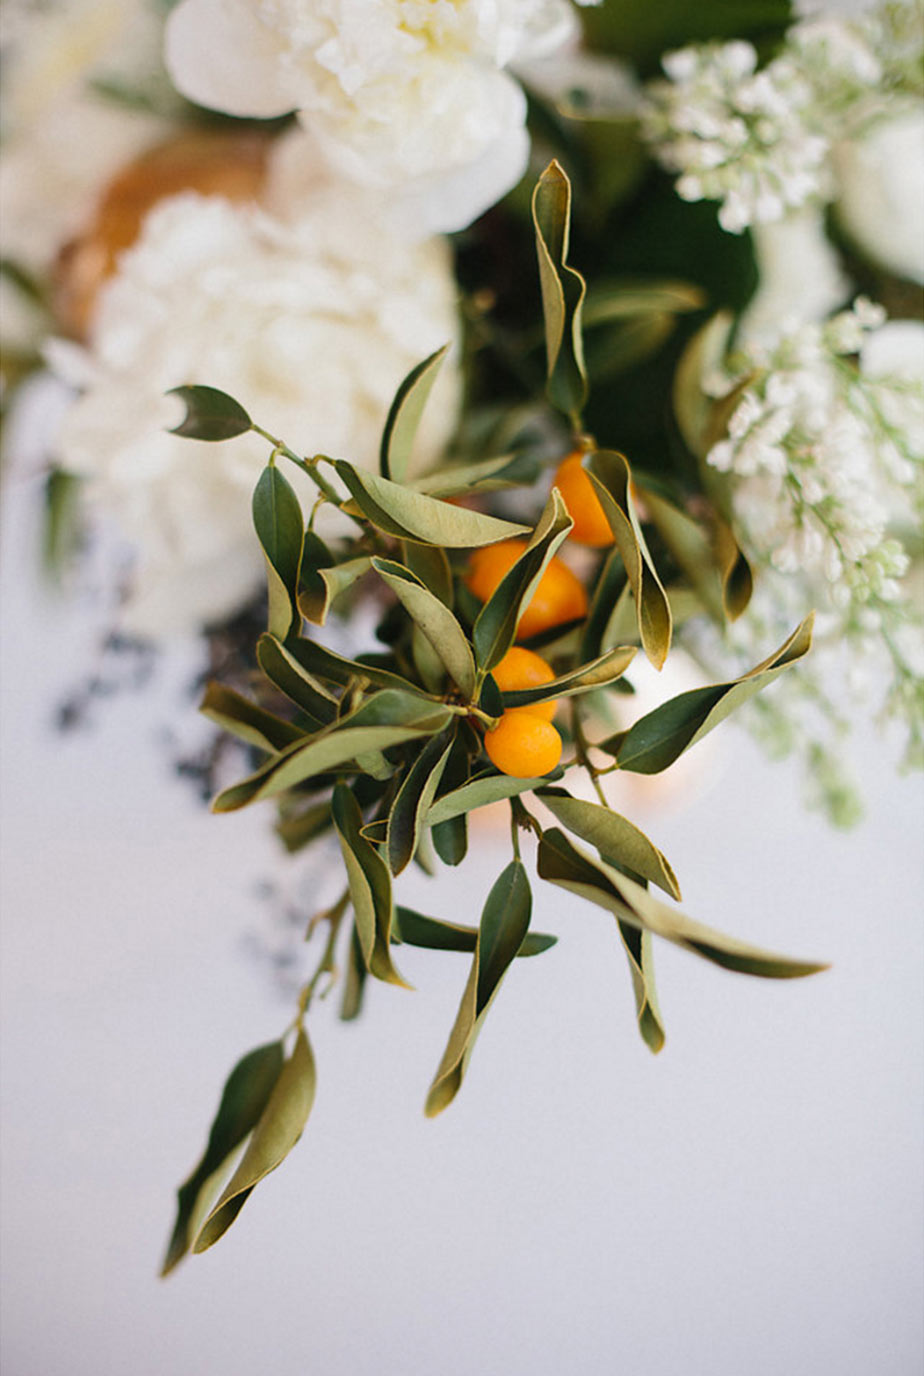 Floral Detail at wedding reception